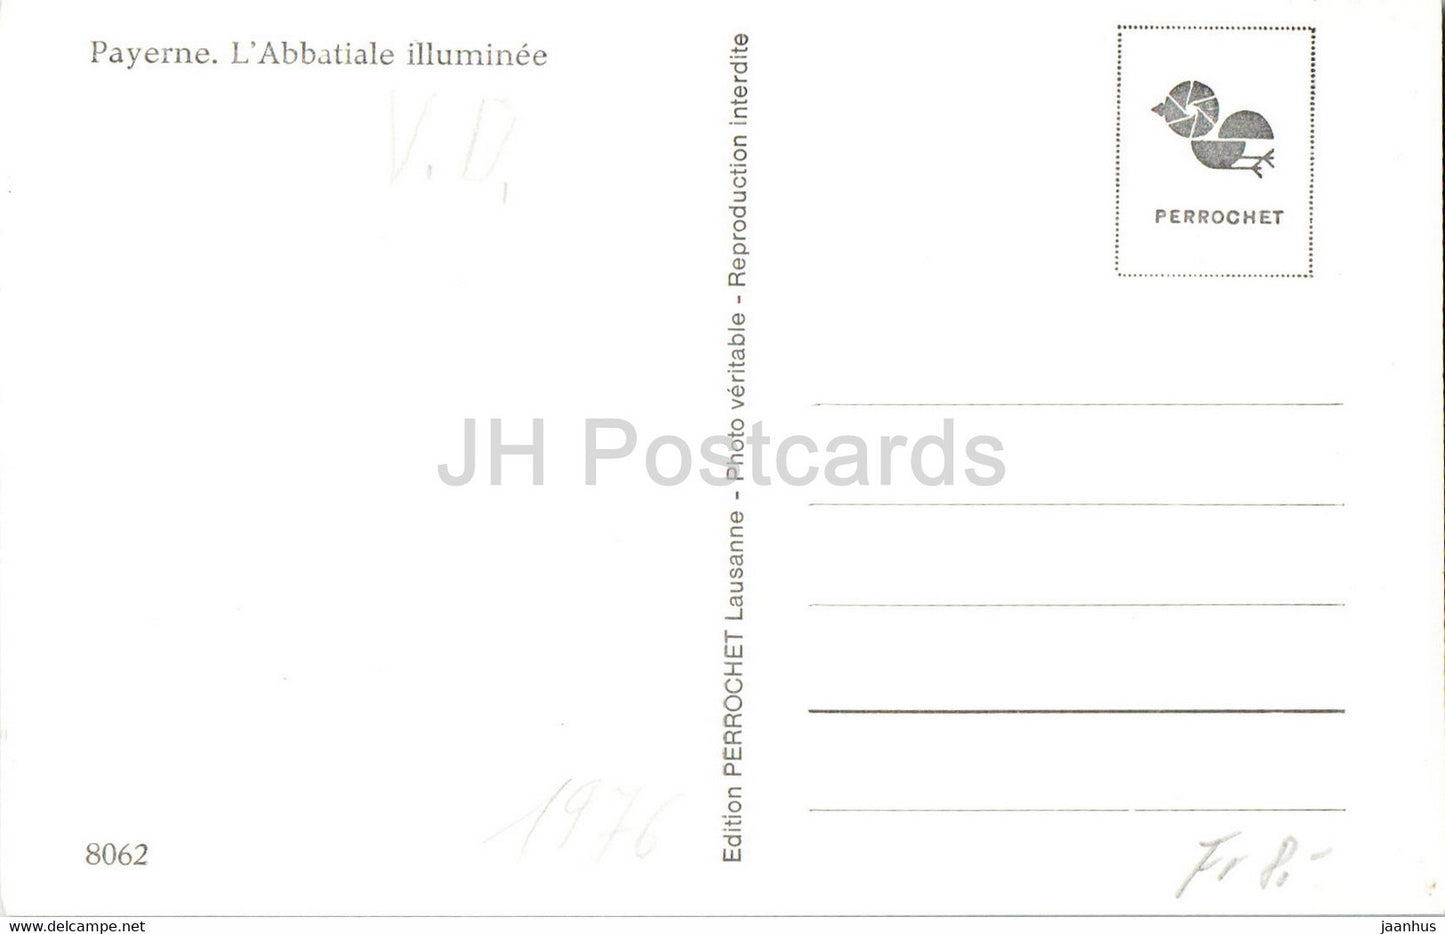 Payerne - L' Abbatiale illuminee - Abbey - 8062 - old postcard - Switzerland - unused